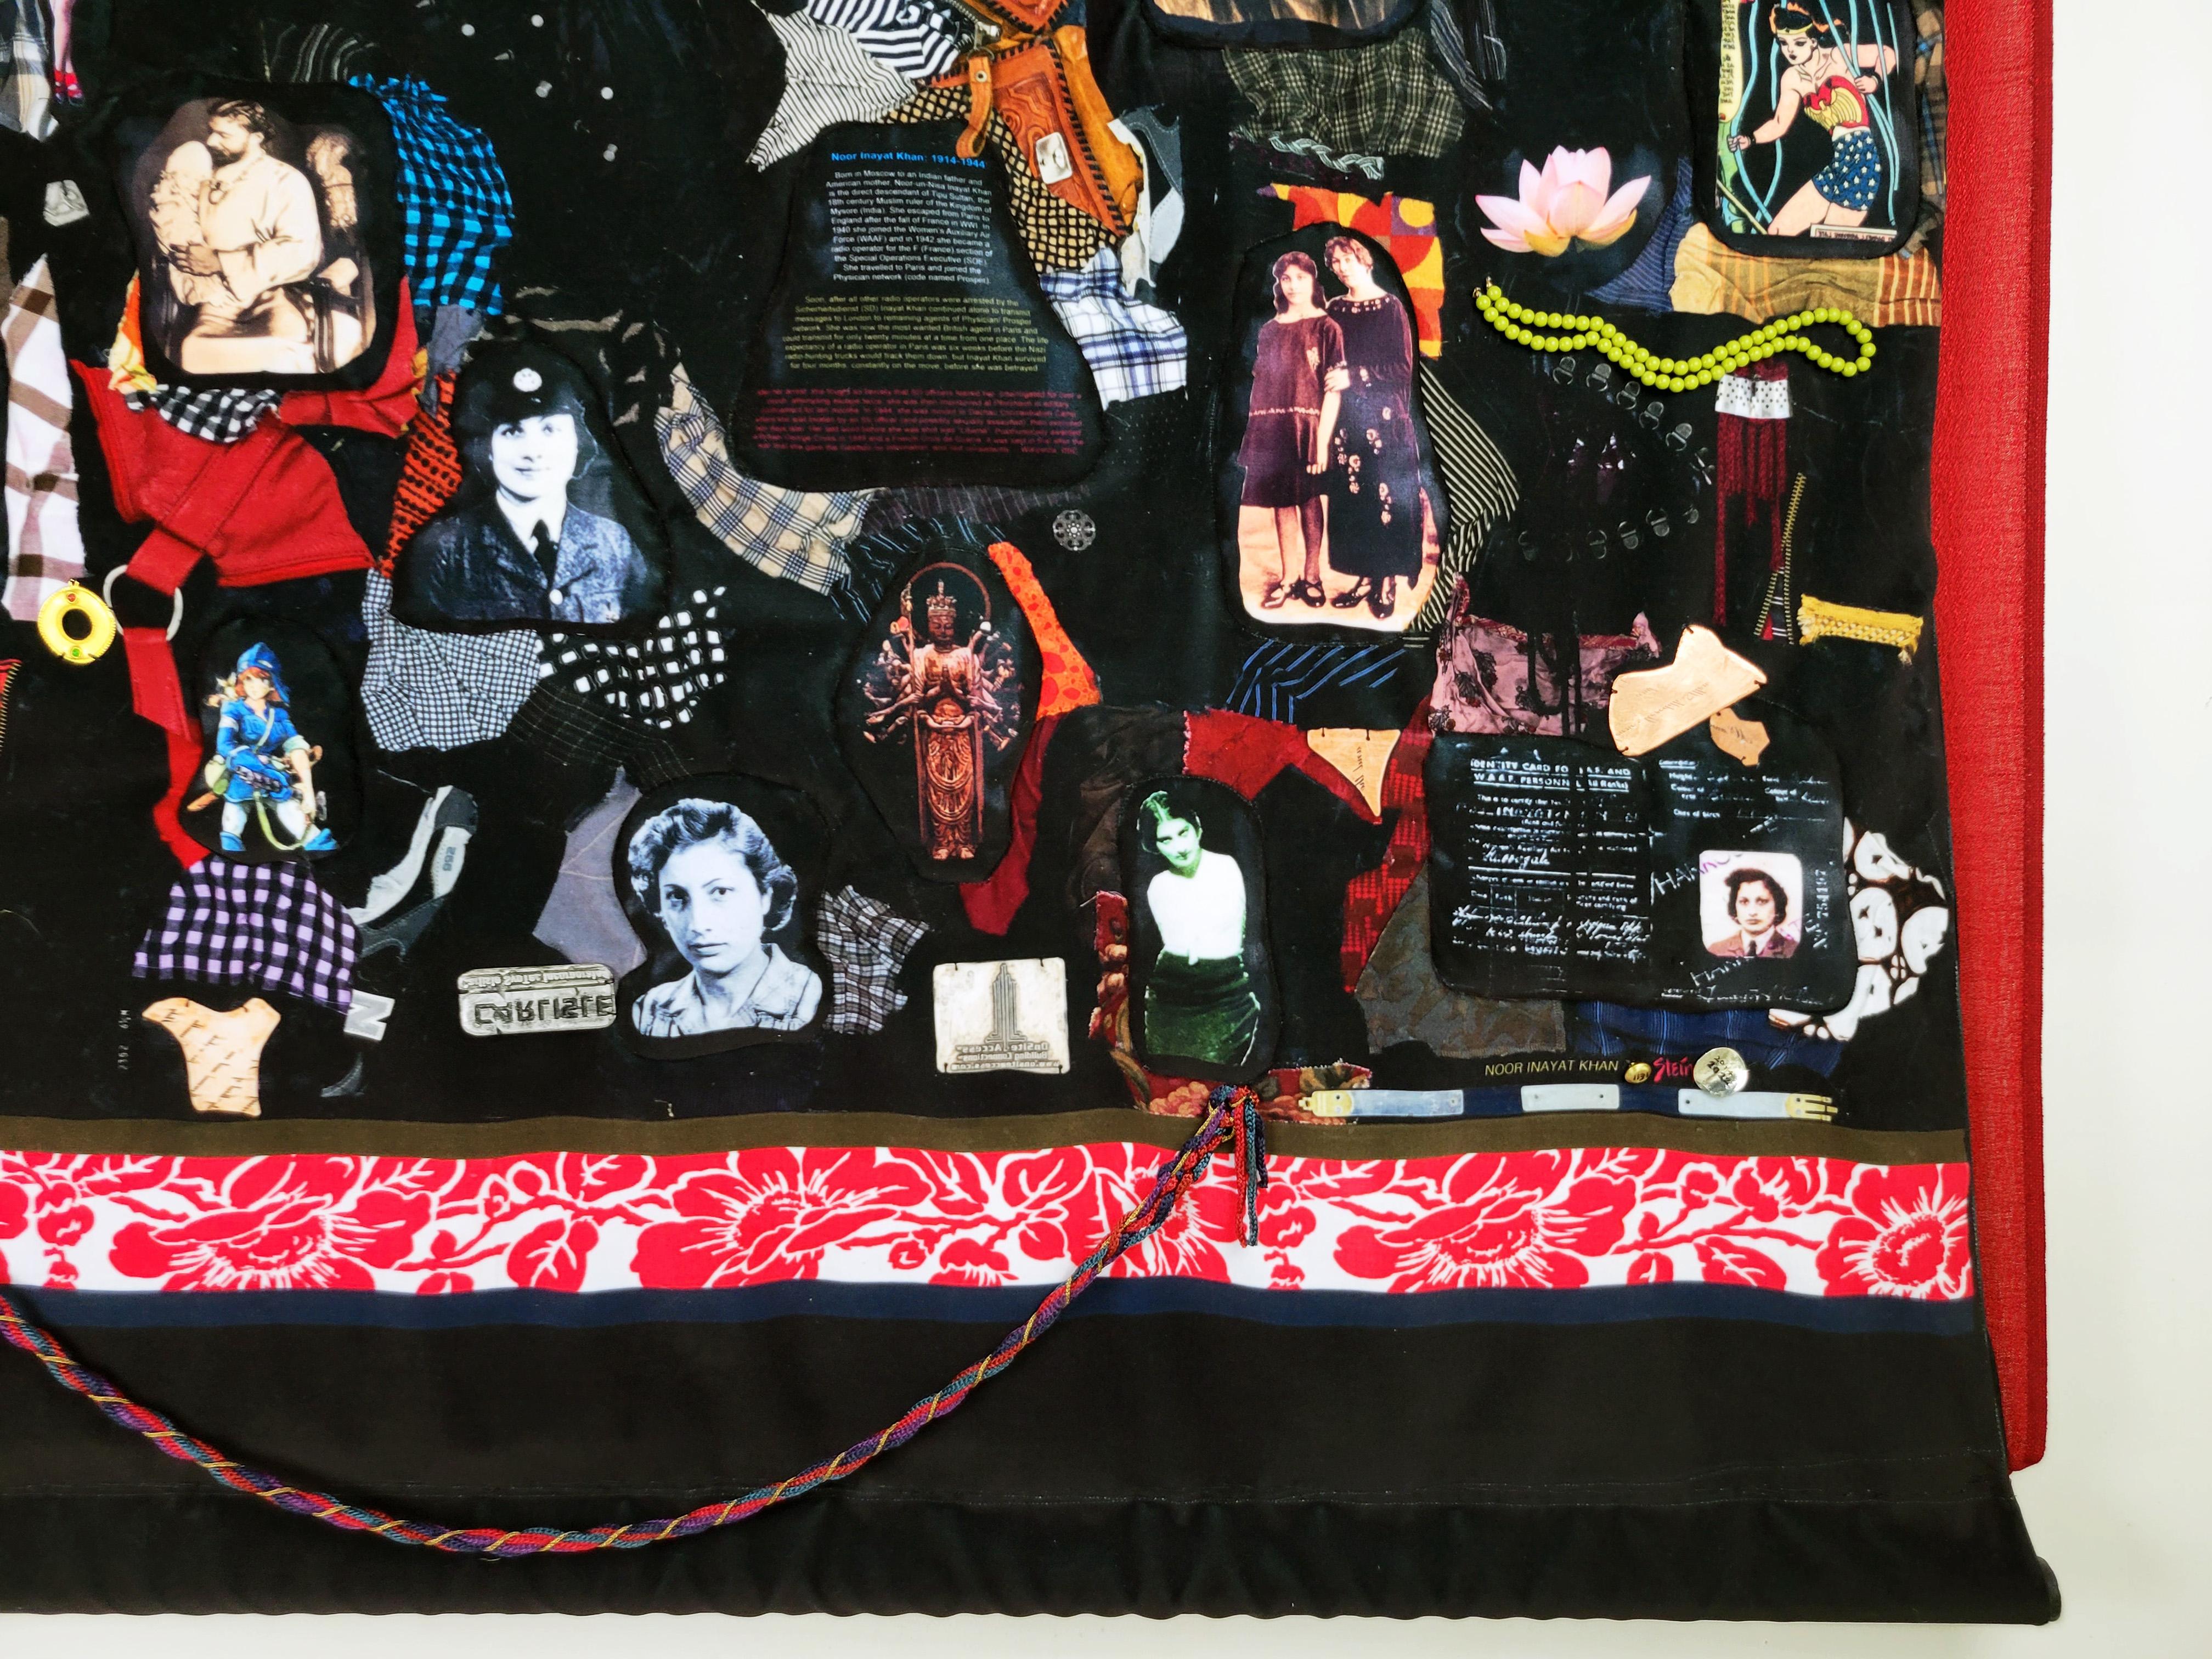 Linda Stein, Noor Inayat Khan 1131 - Feminist Contemporary Fabric Sculptural Wall Tapestry

Noor Inayat Khan 1131 is from Linda Stein's Holocaust Heroes: Fierce Females series, which highlights Holocaust-era female heroes.

Stein began to produce